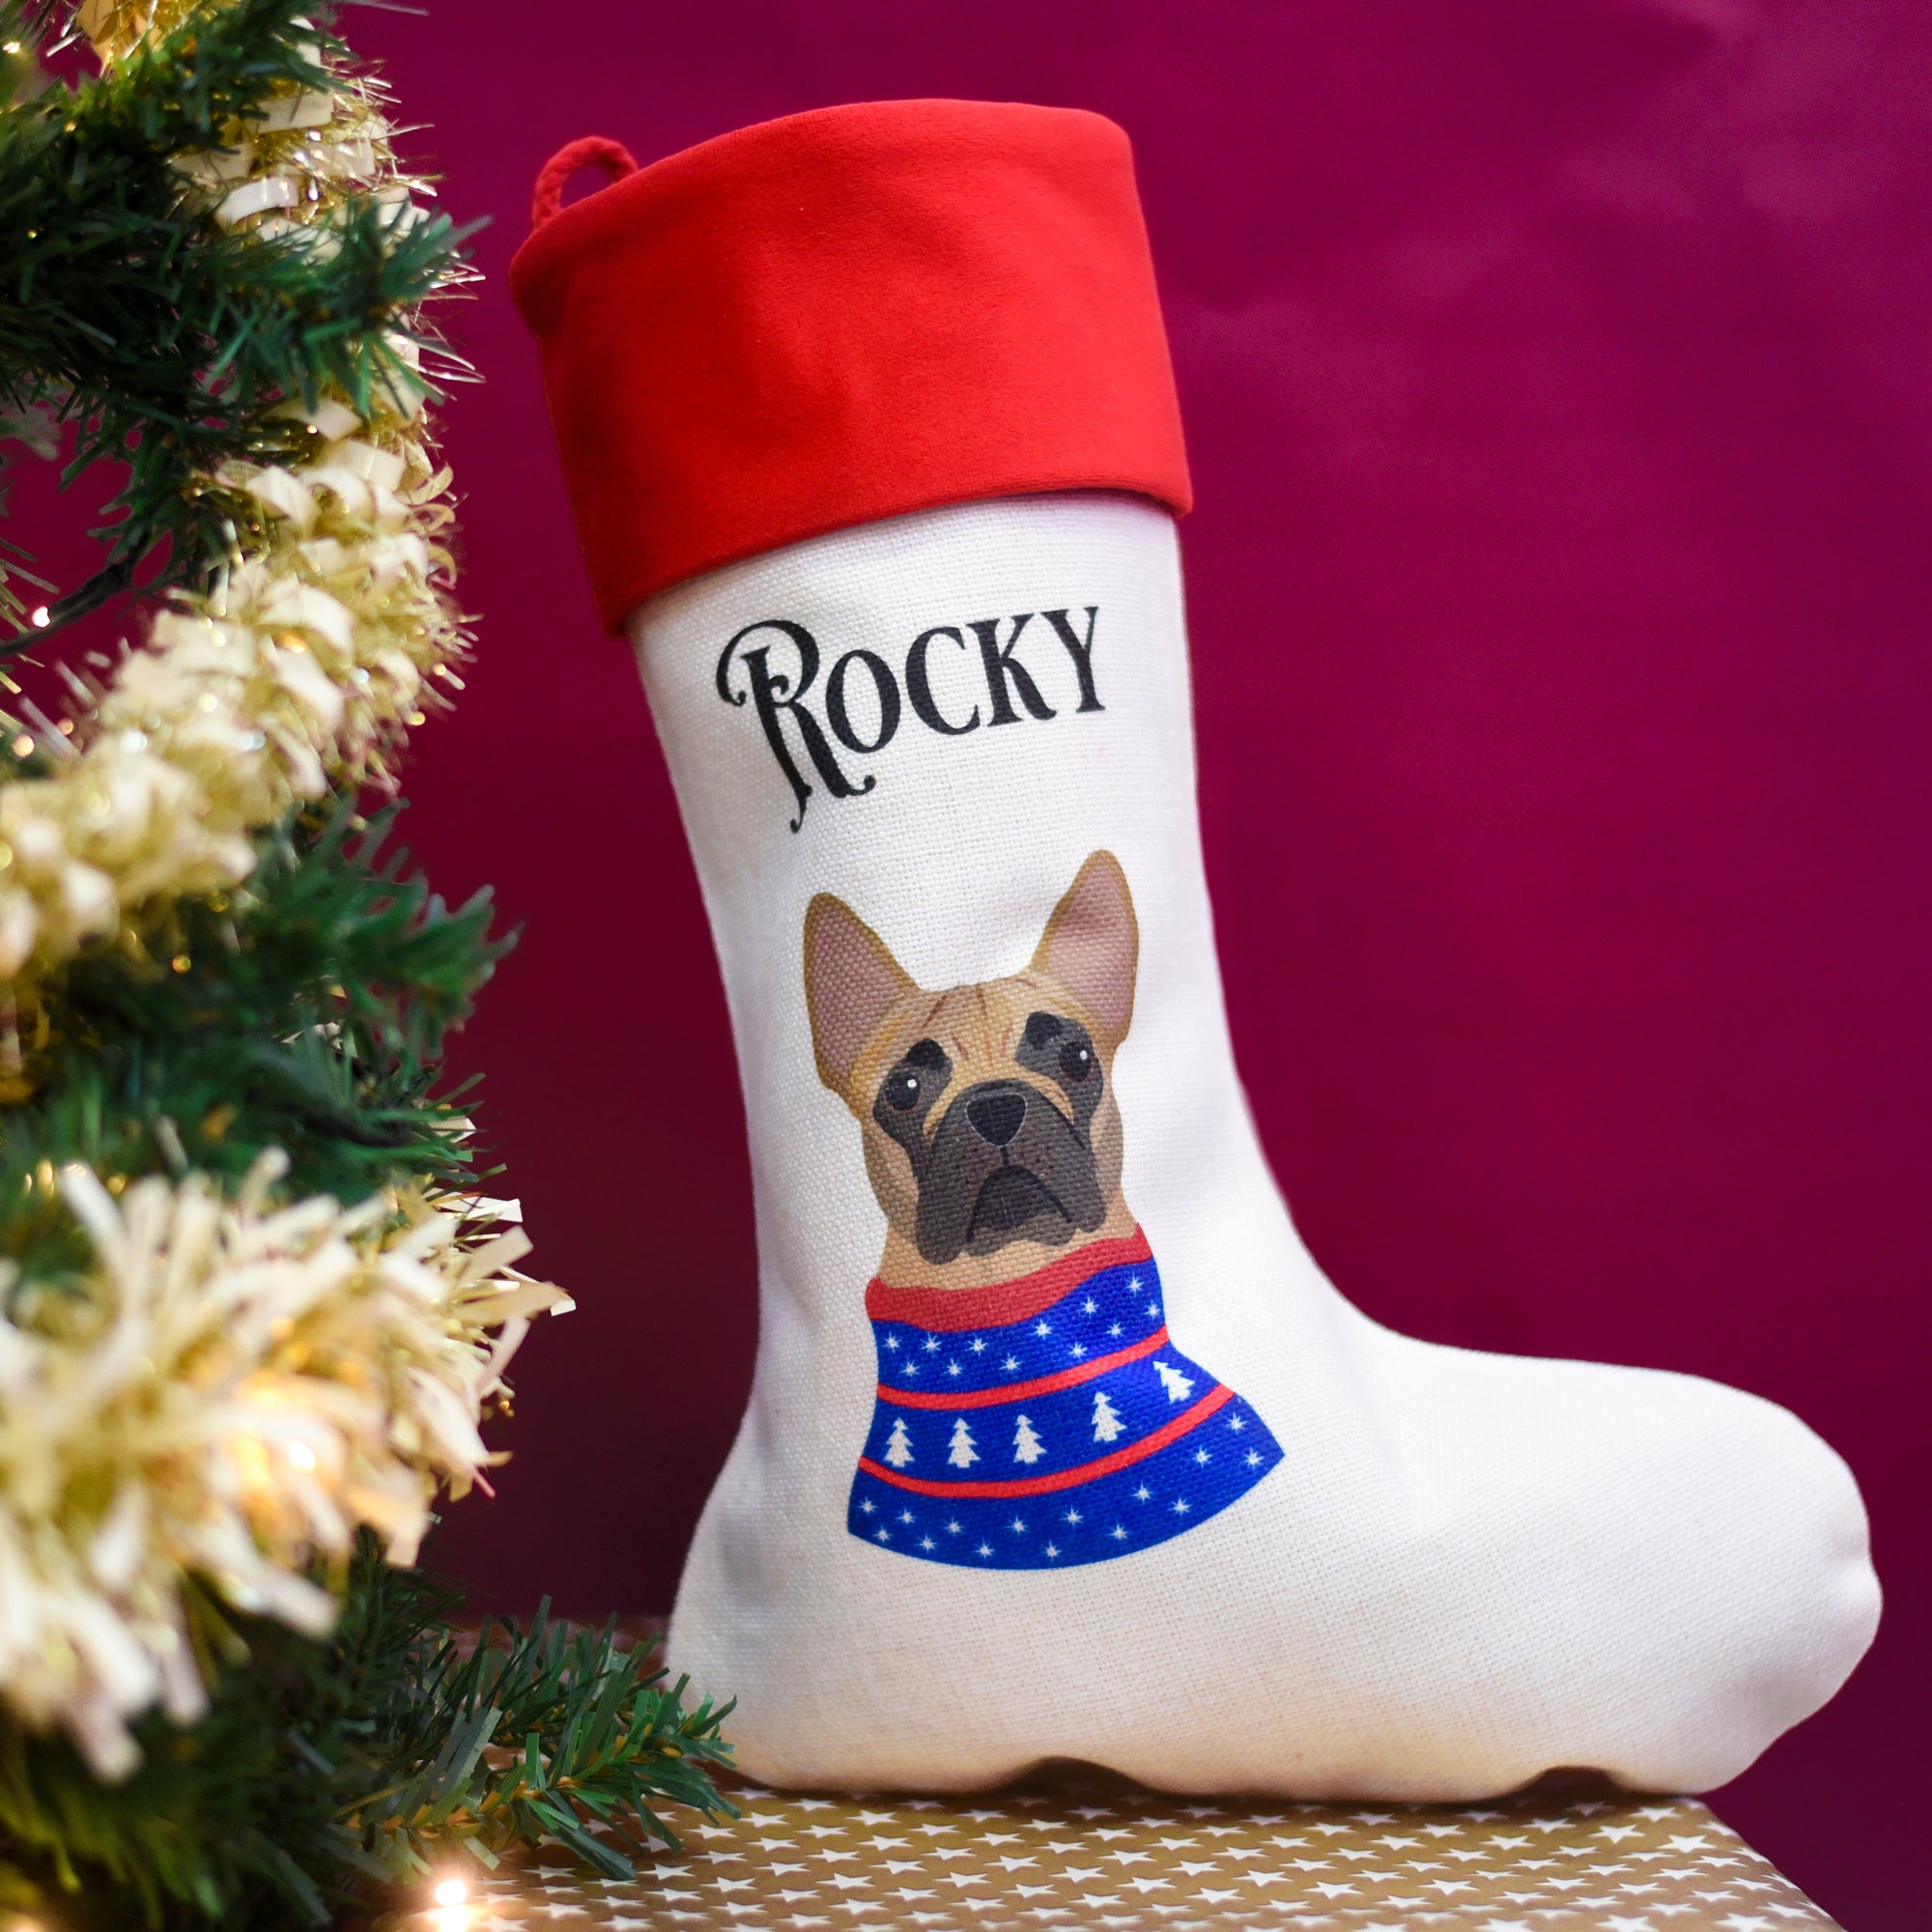 Personalised Dog Christmas Jumper Present Stocking